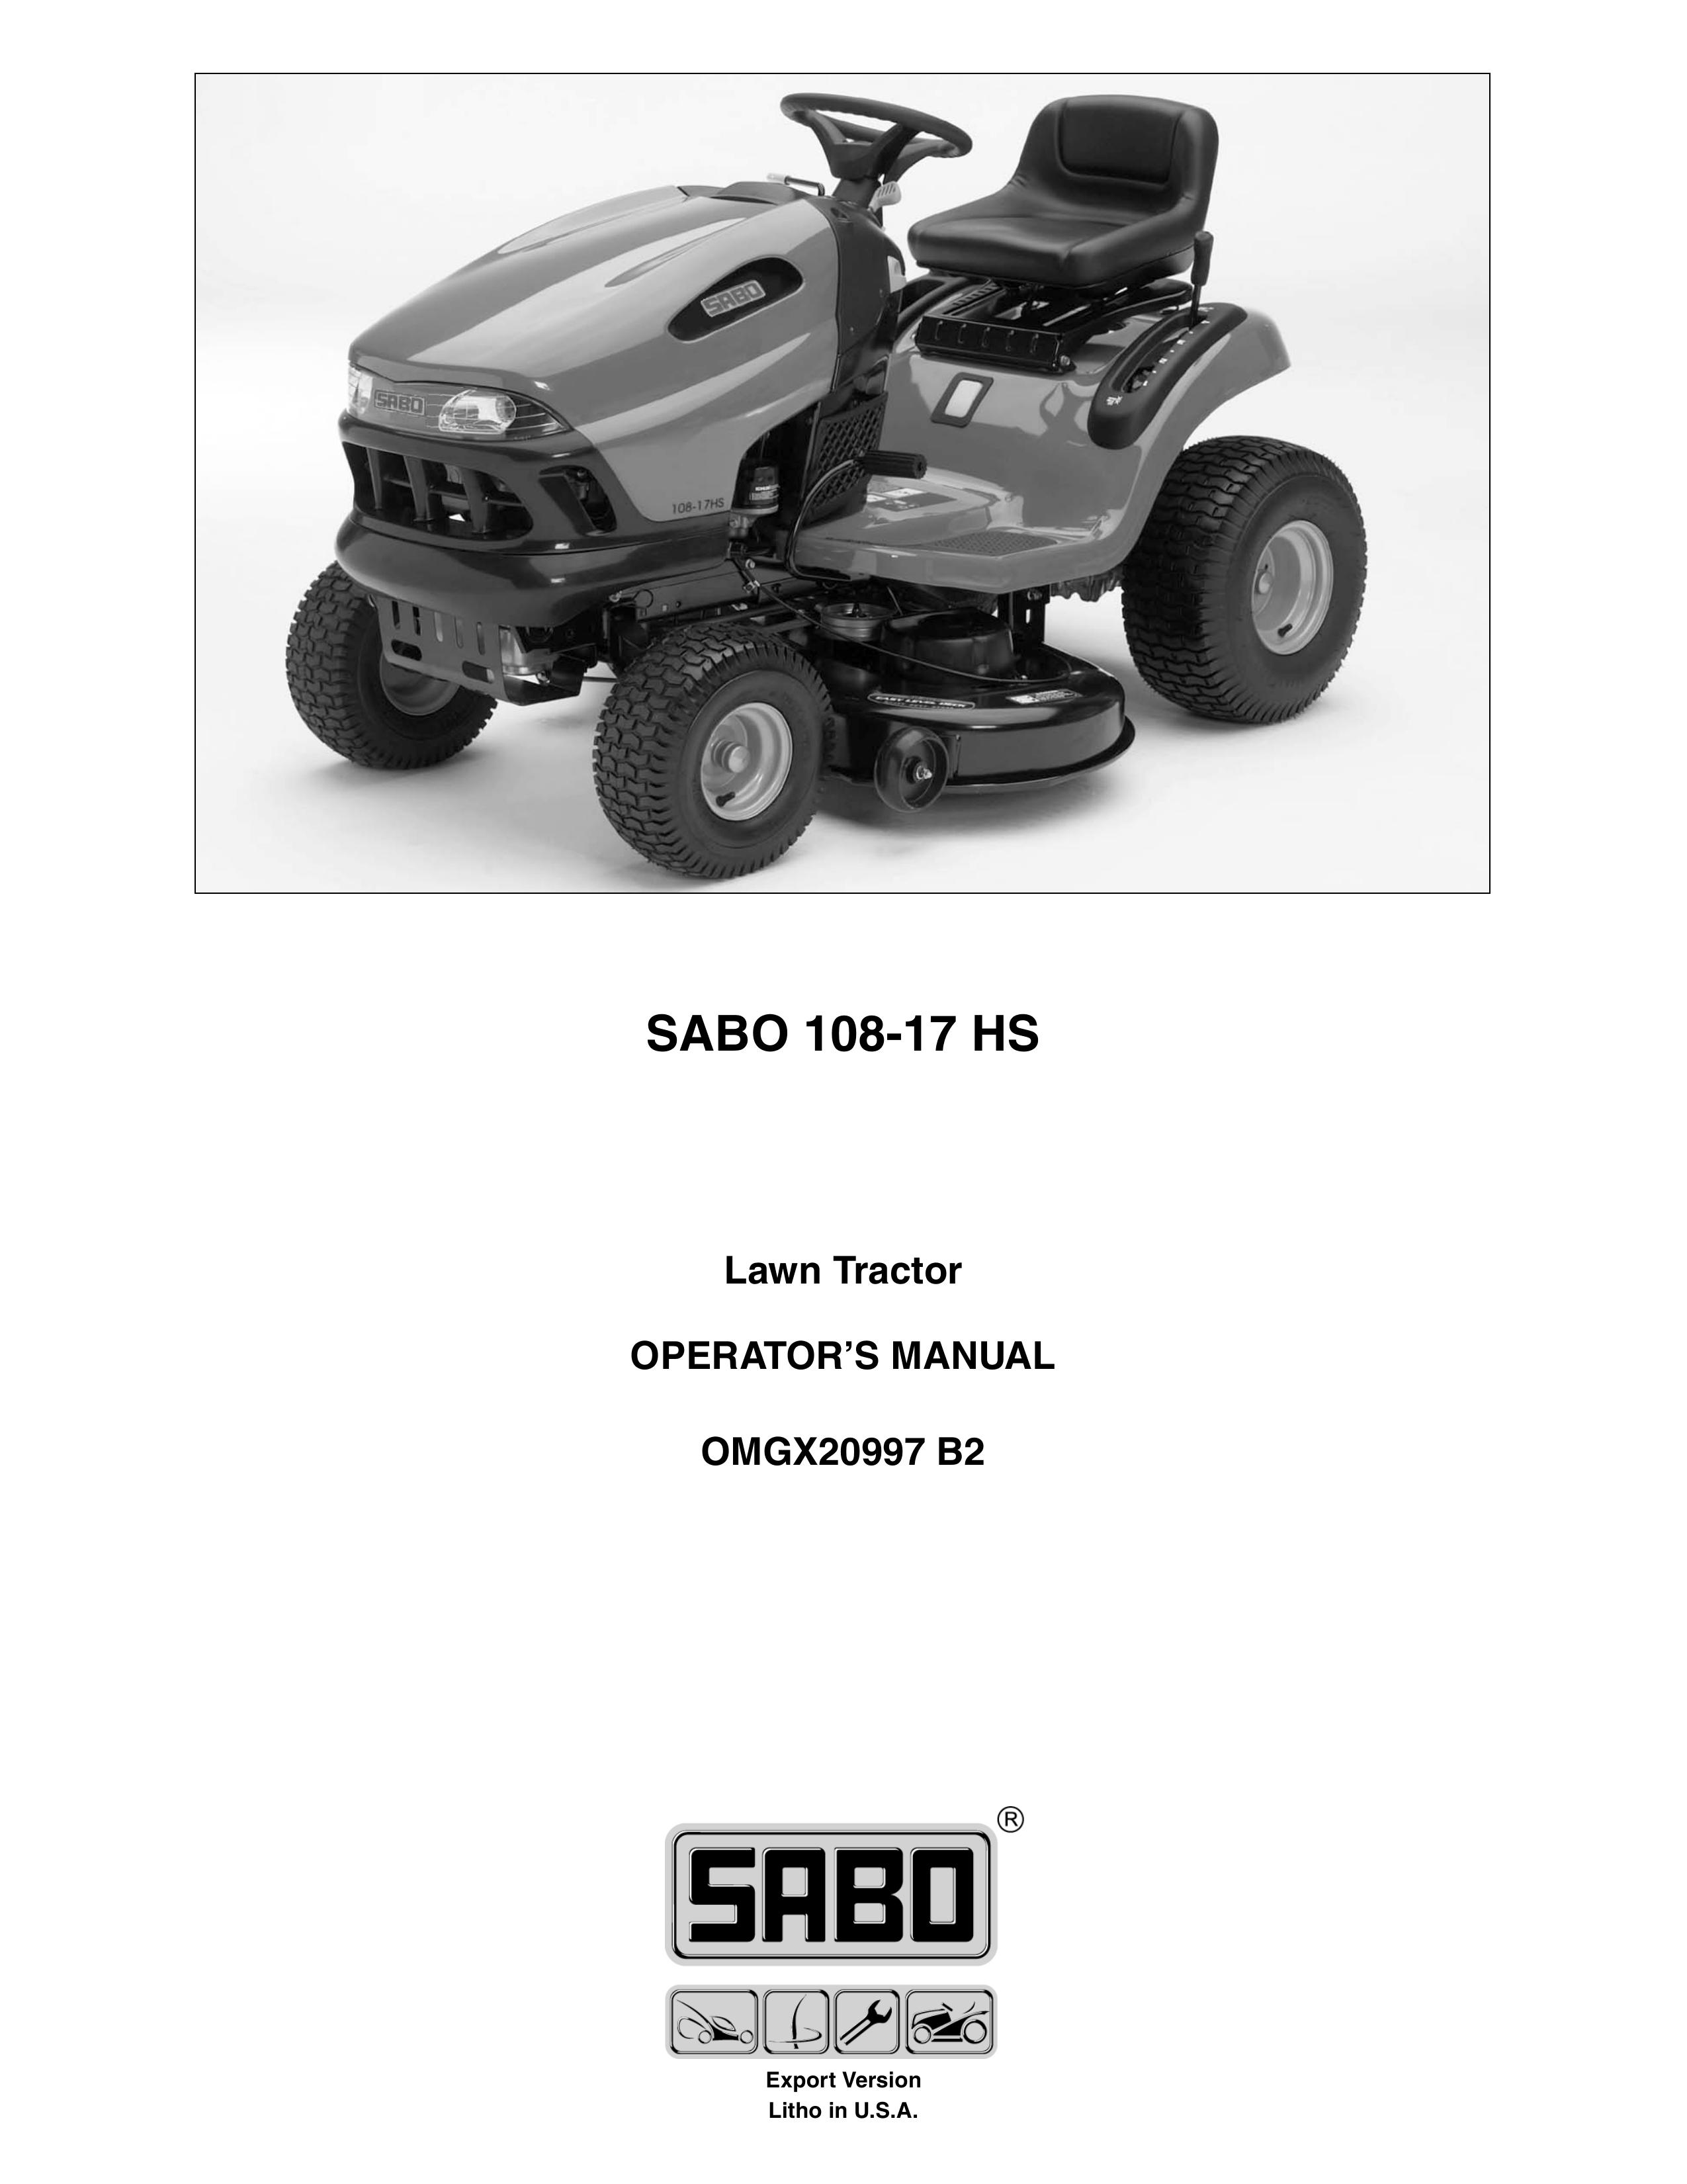 Sabo 108-17 HS Lawn Mower User Manual